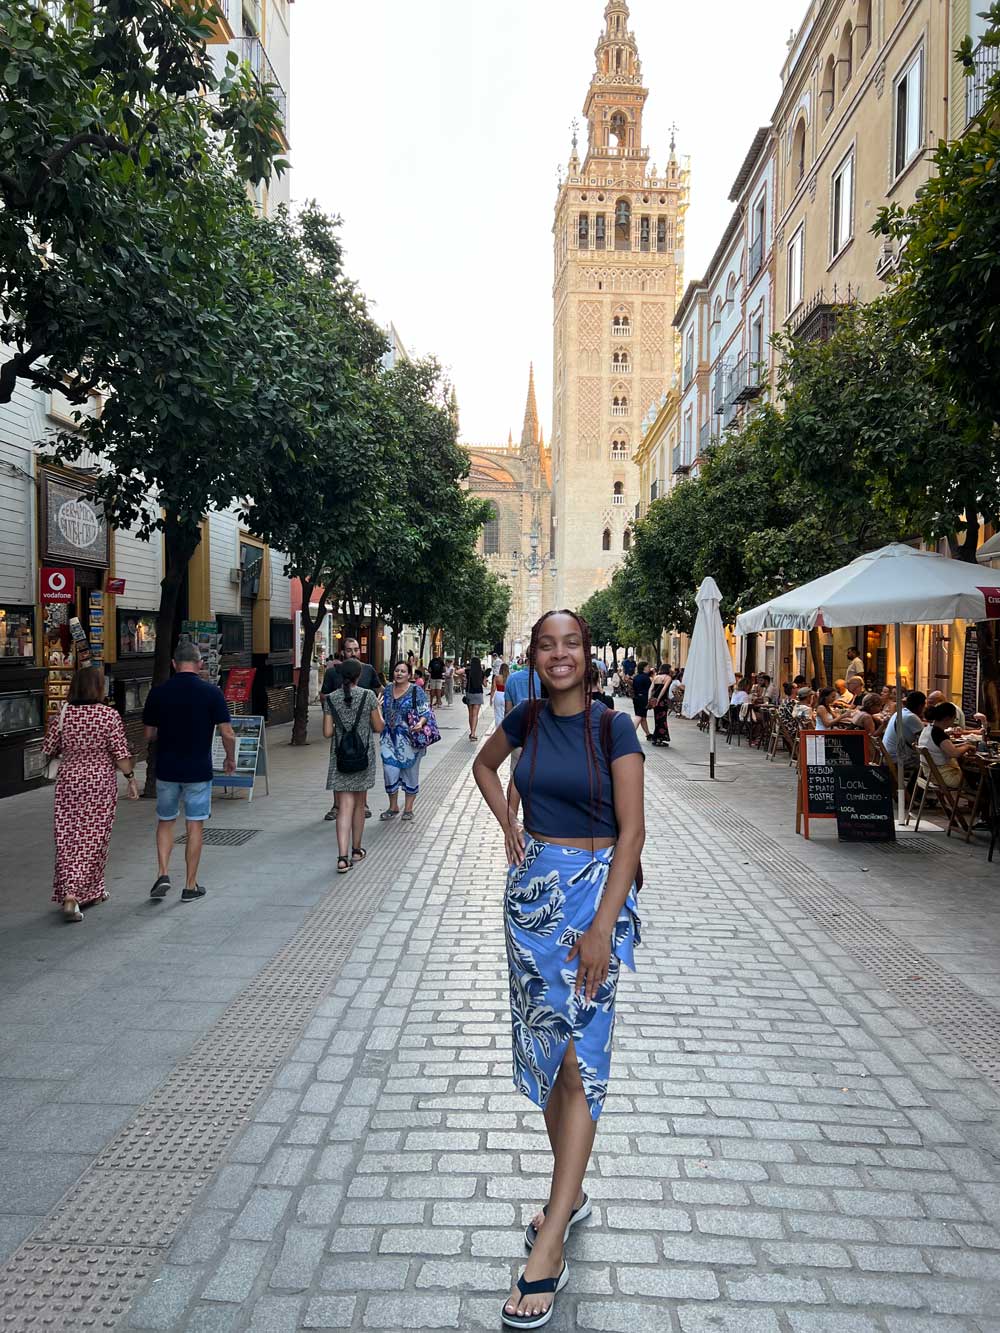 Kameron smiling in a blue floral skirt in front of La Giralda in Seville